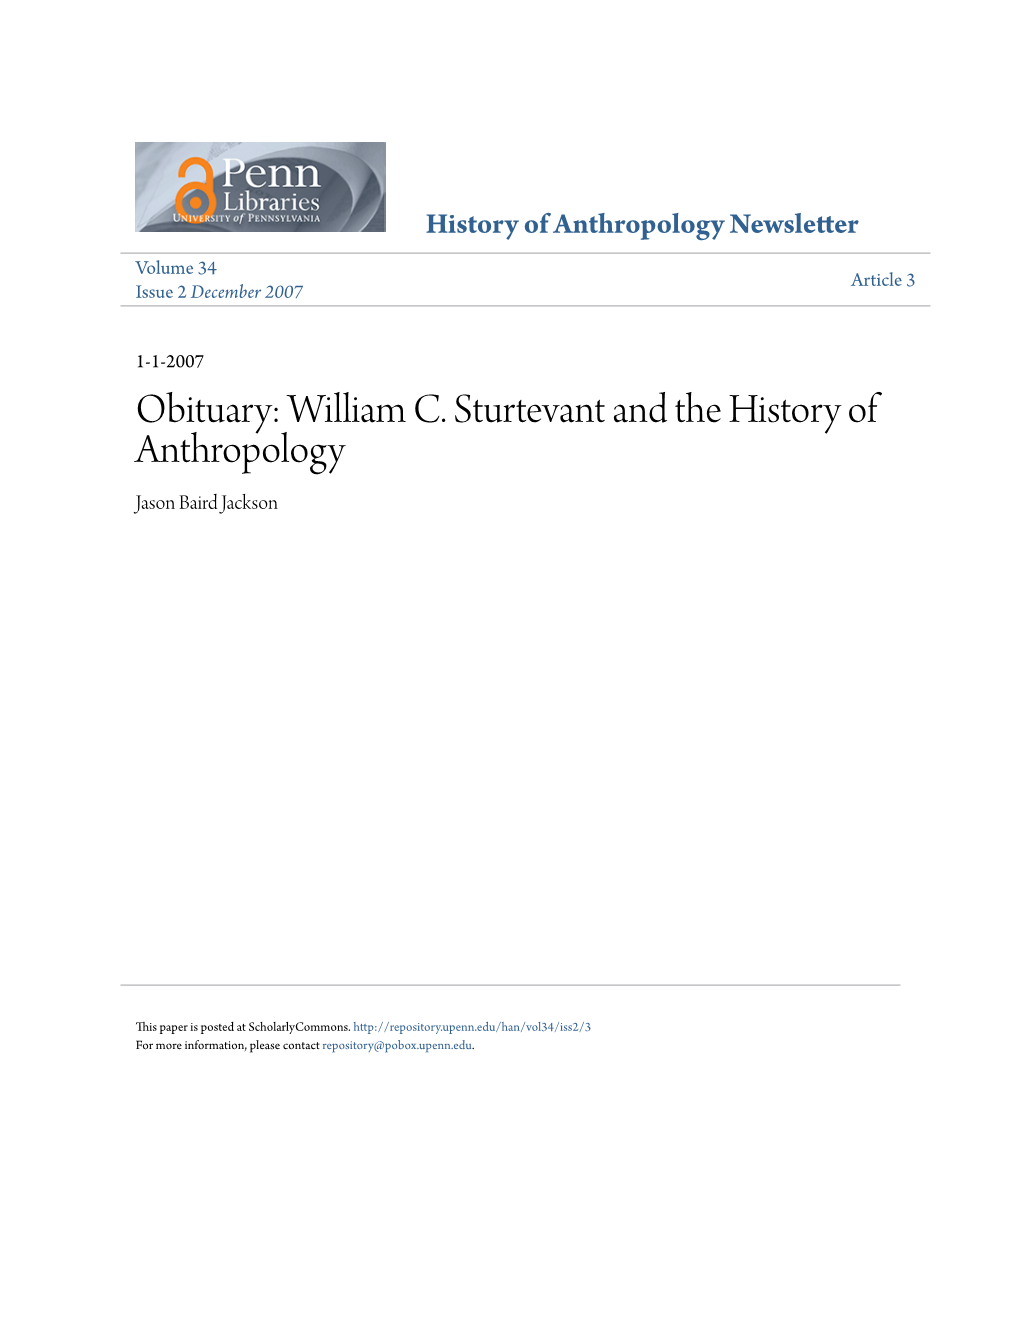 William C. Sturtevant and the History of Anthropology Jason Baird Jackson